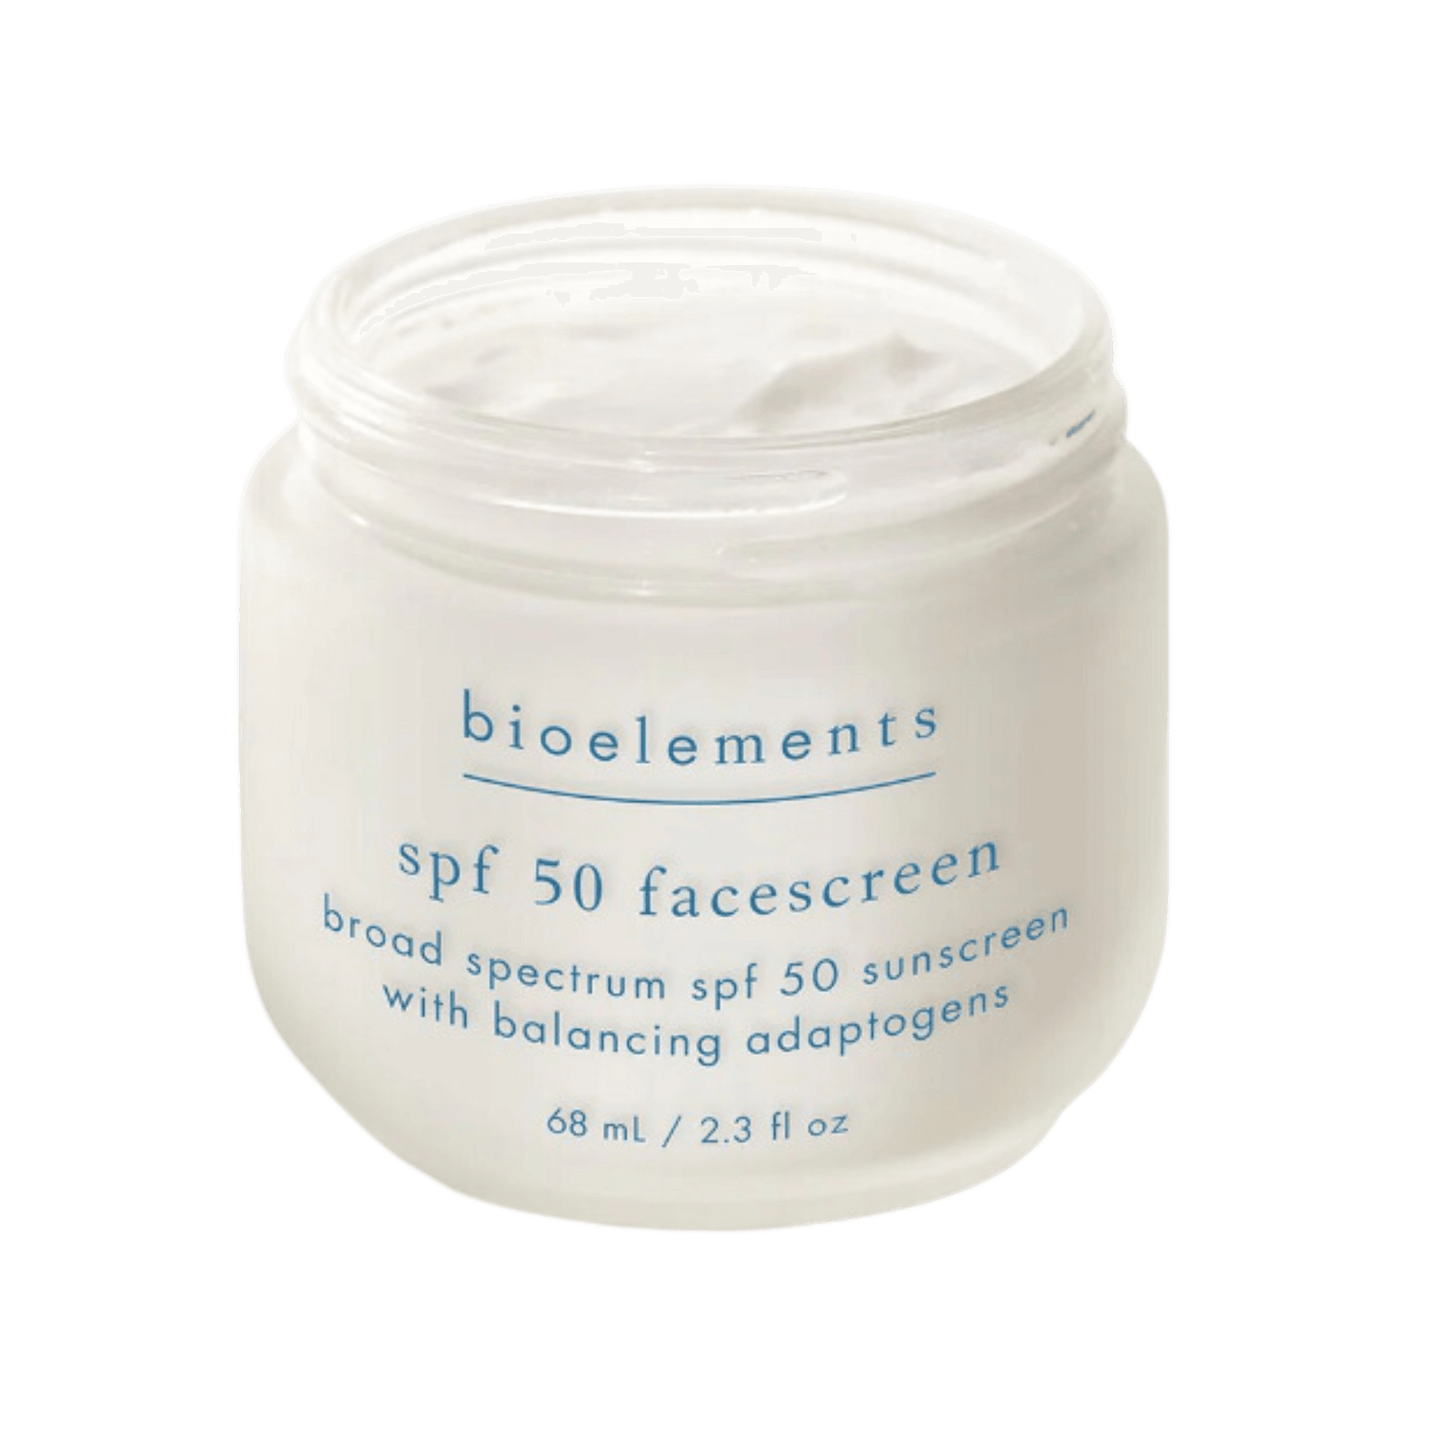 Bioelements SPF 50 Facescreen